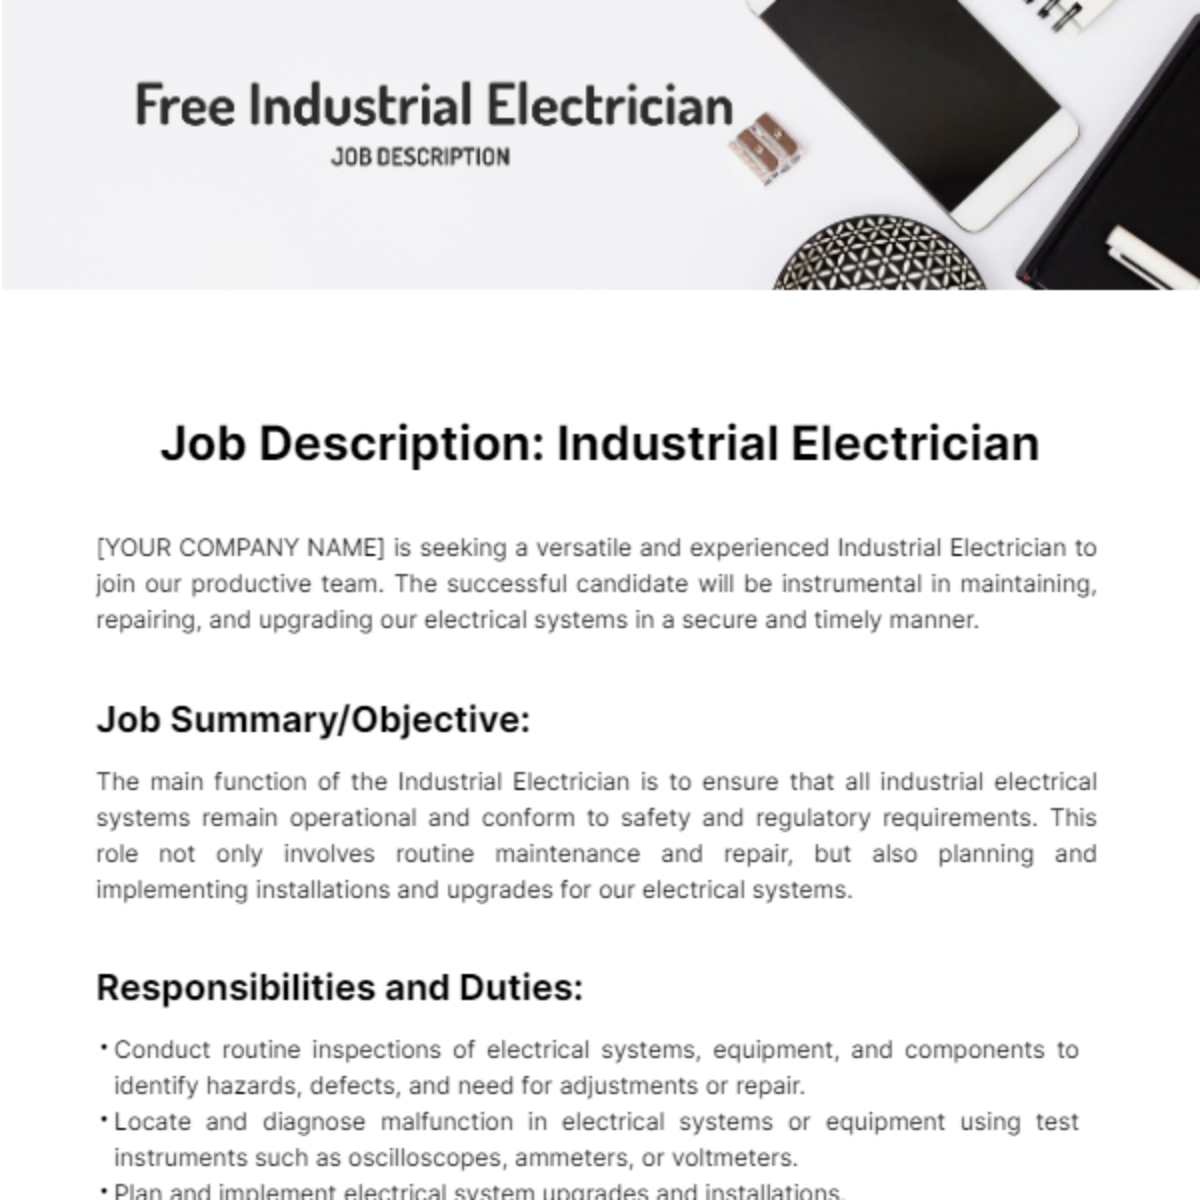 Industrial Electrician Job Description Template - Edit Online ...